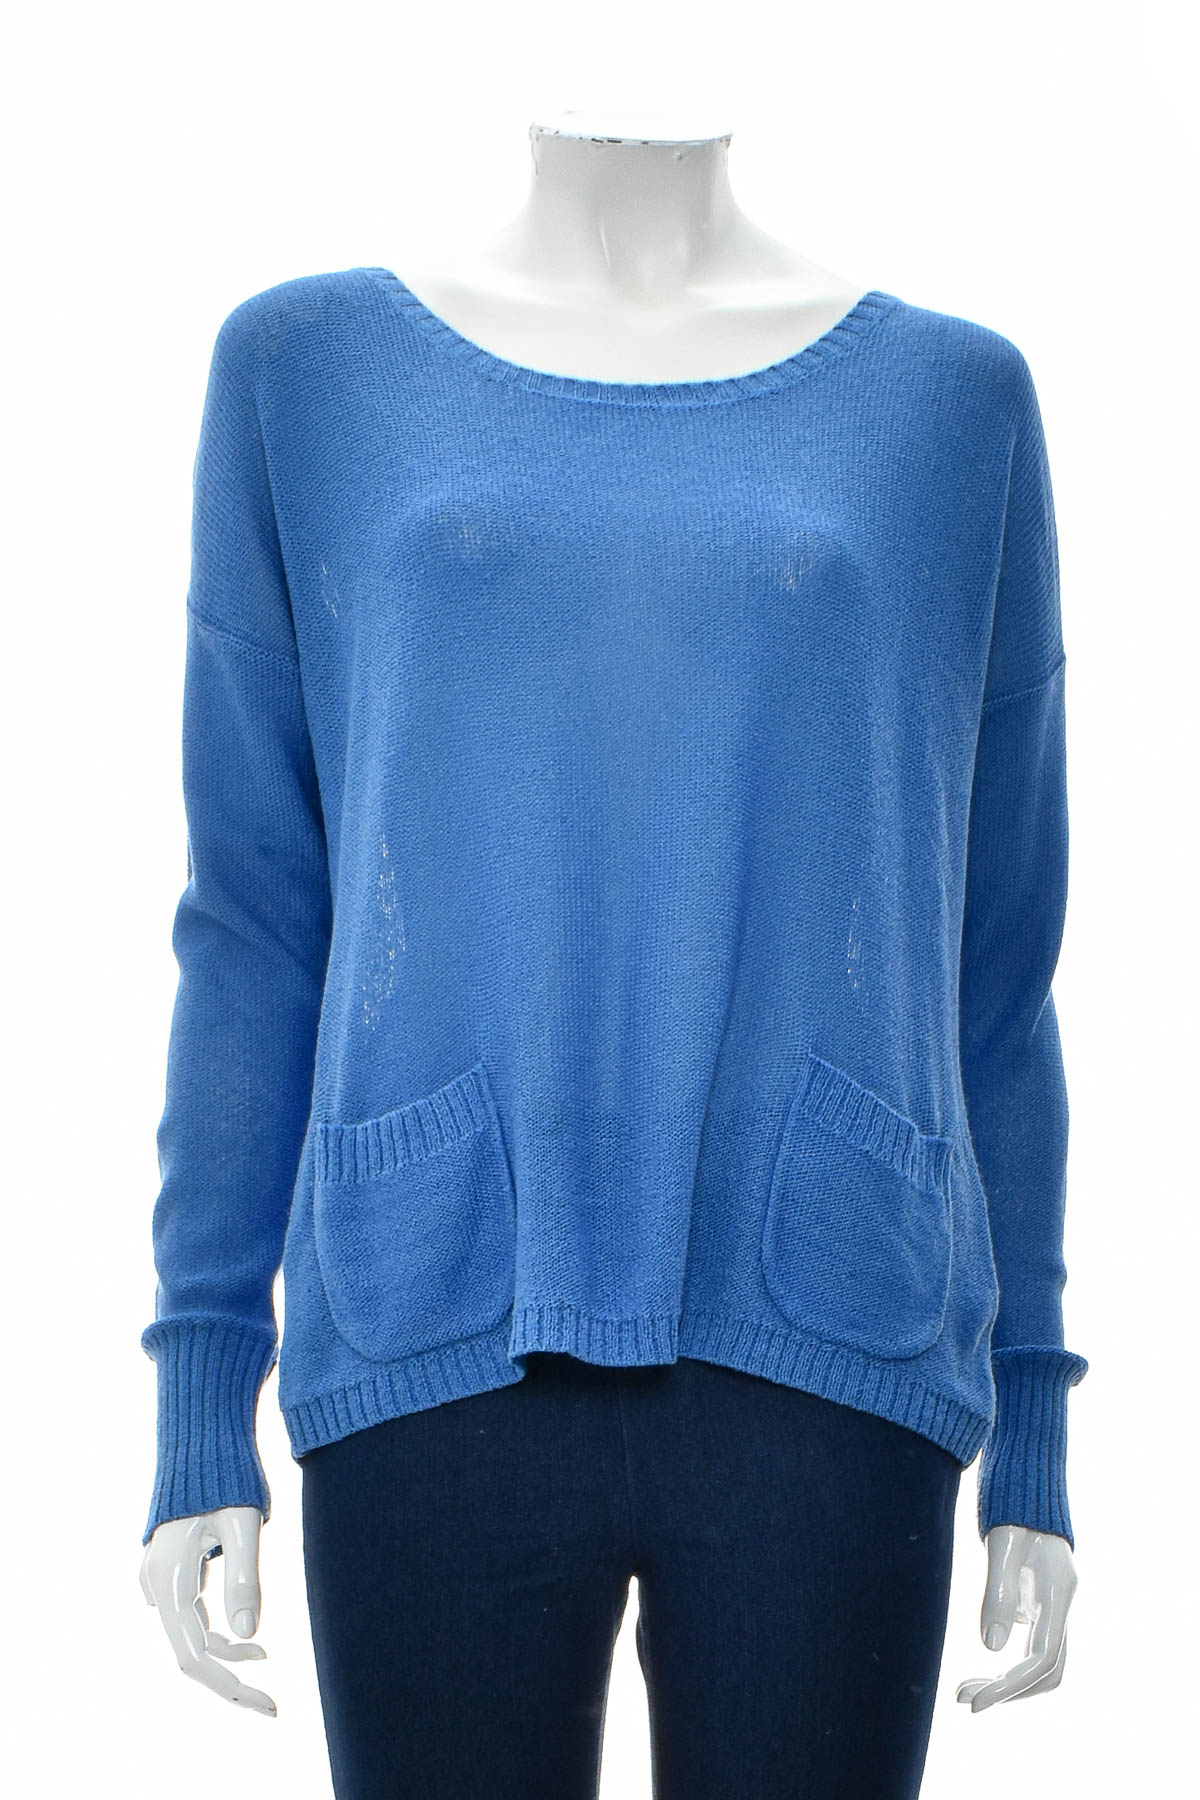 Women's sweater - Cindy Crawford - 0